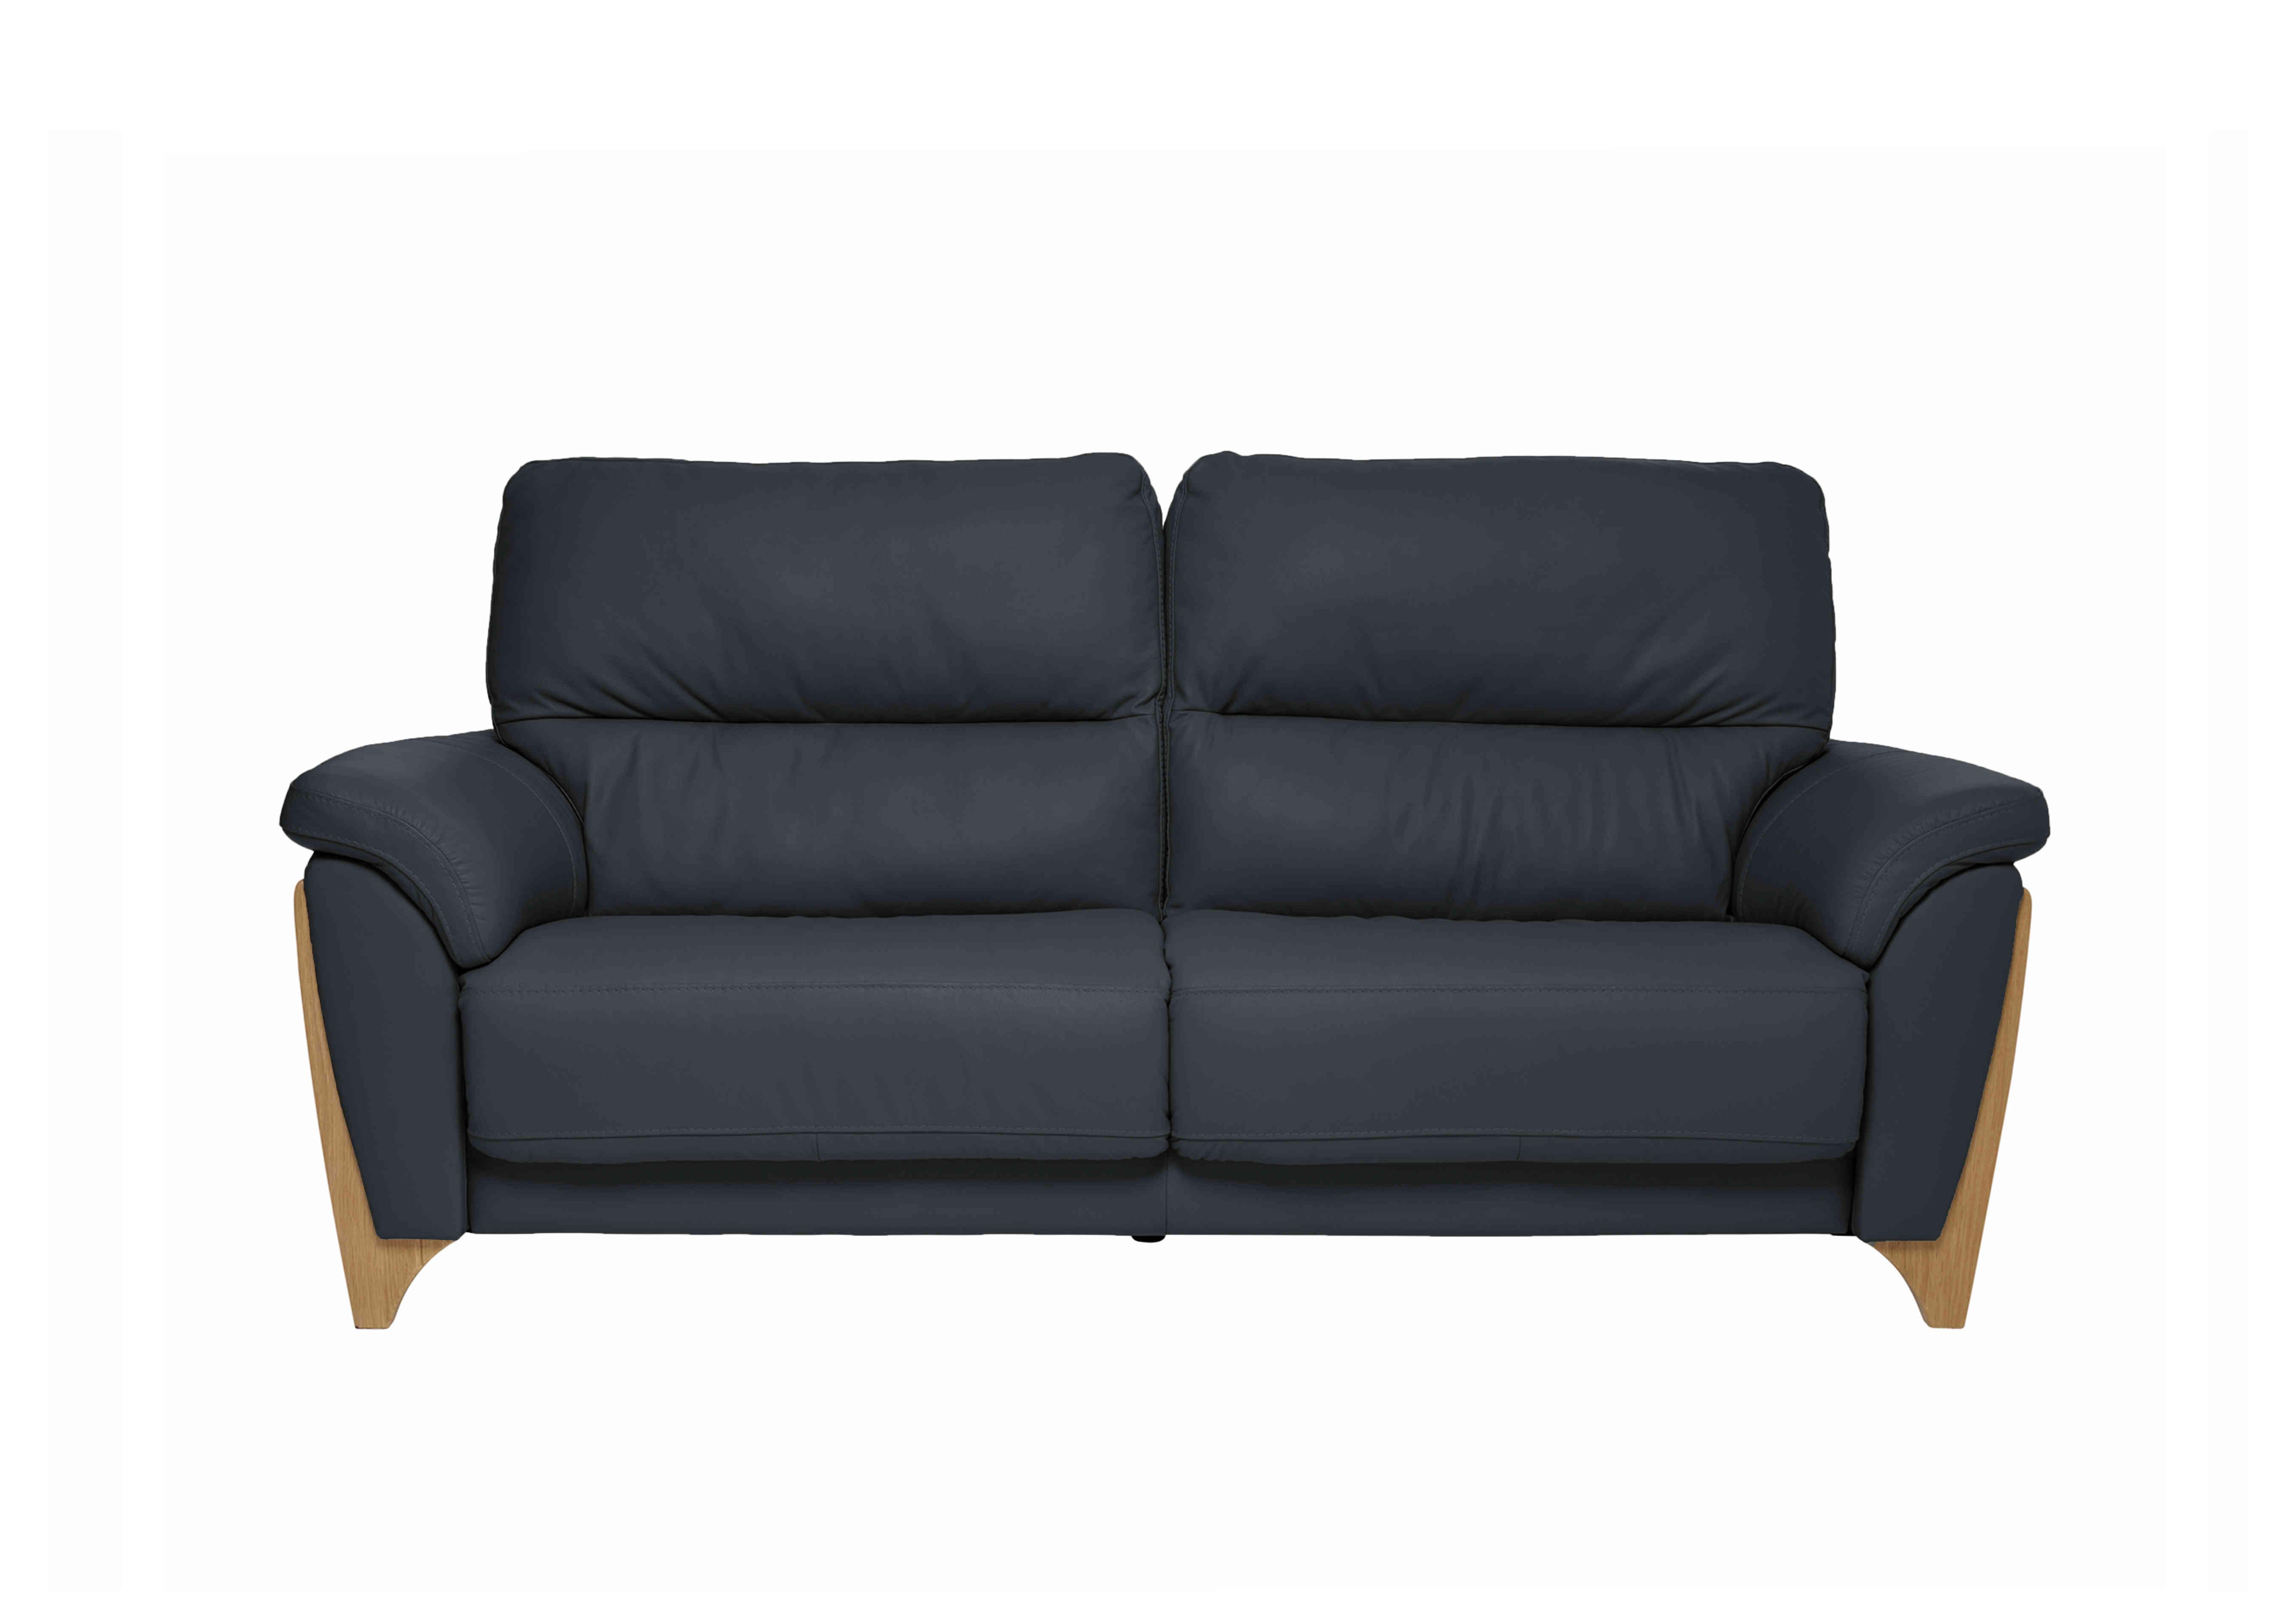 Enna Large Leather Sofa in L908 on Furniture Village